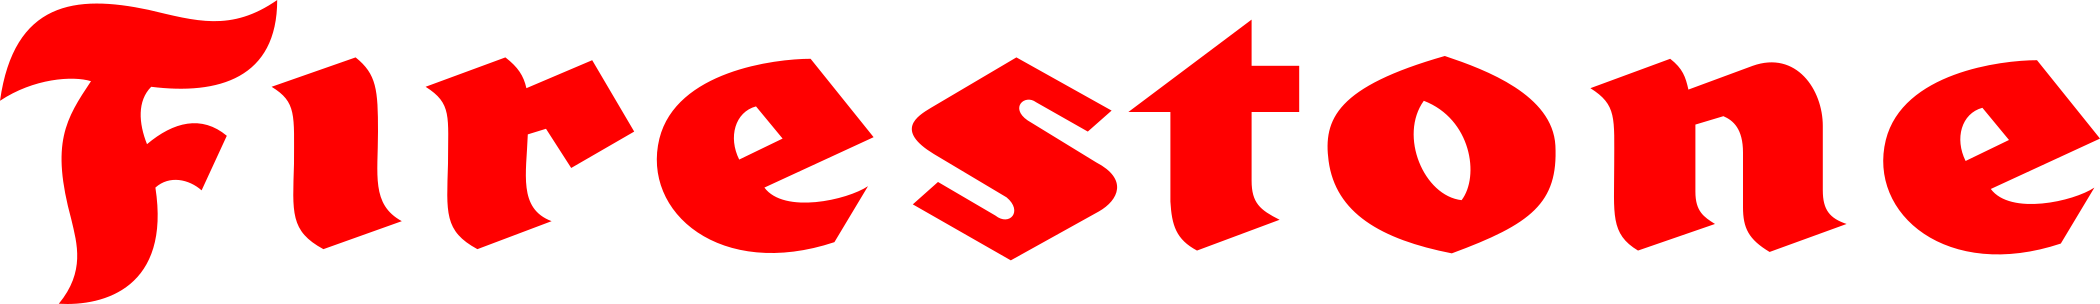 firestone logo.